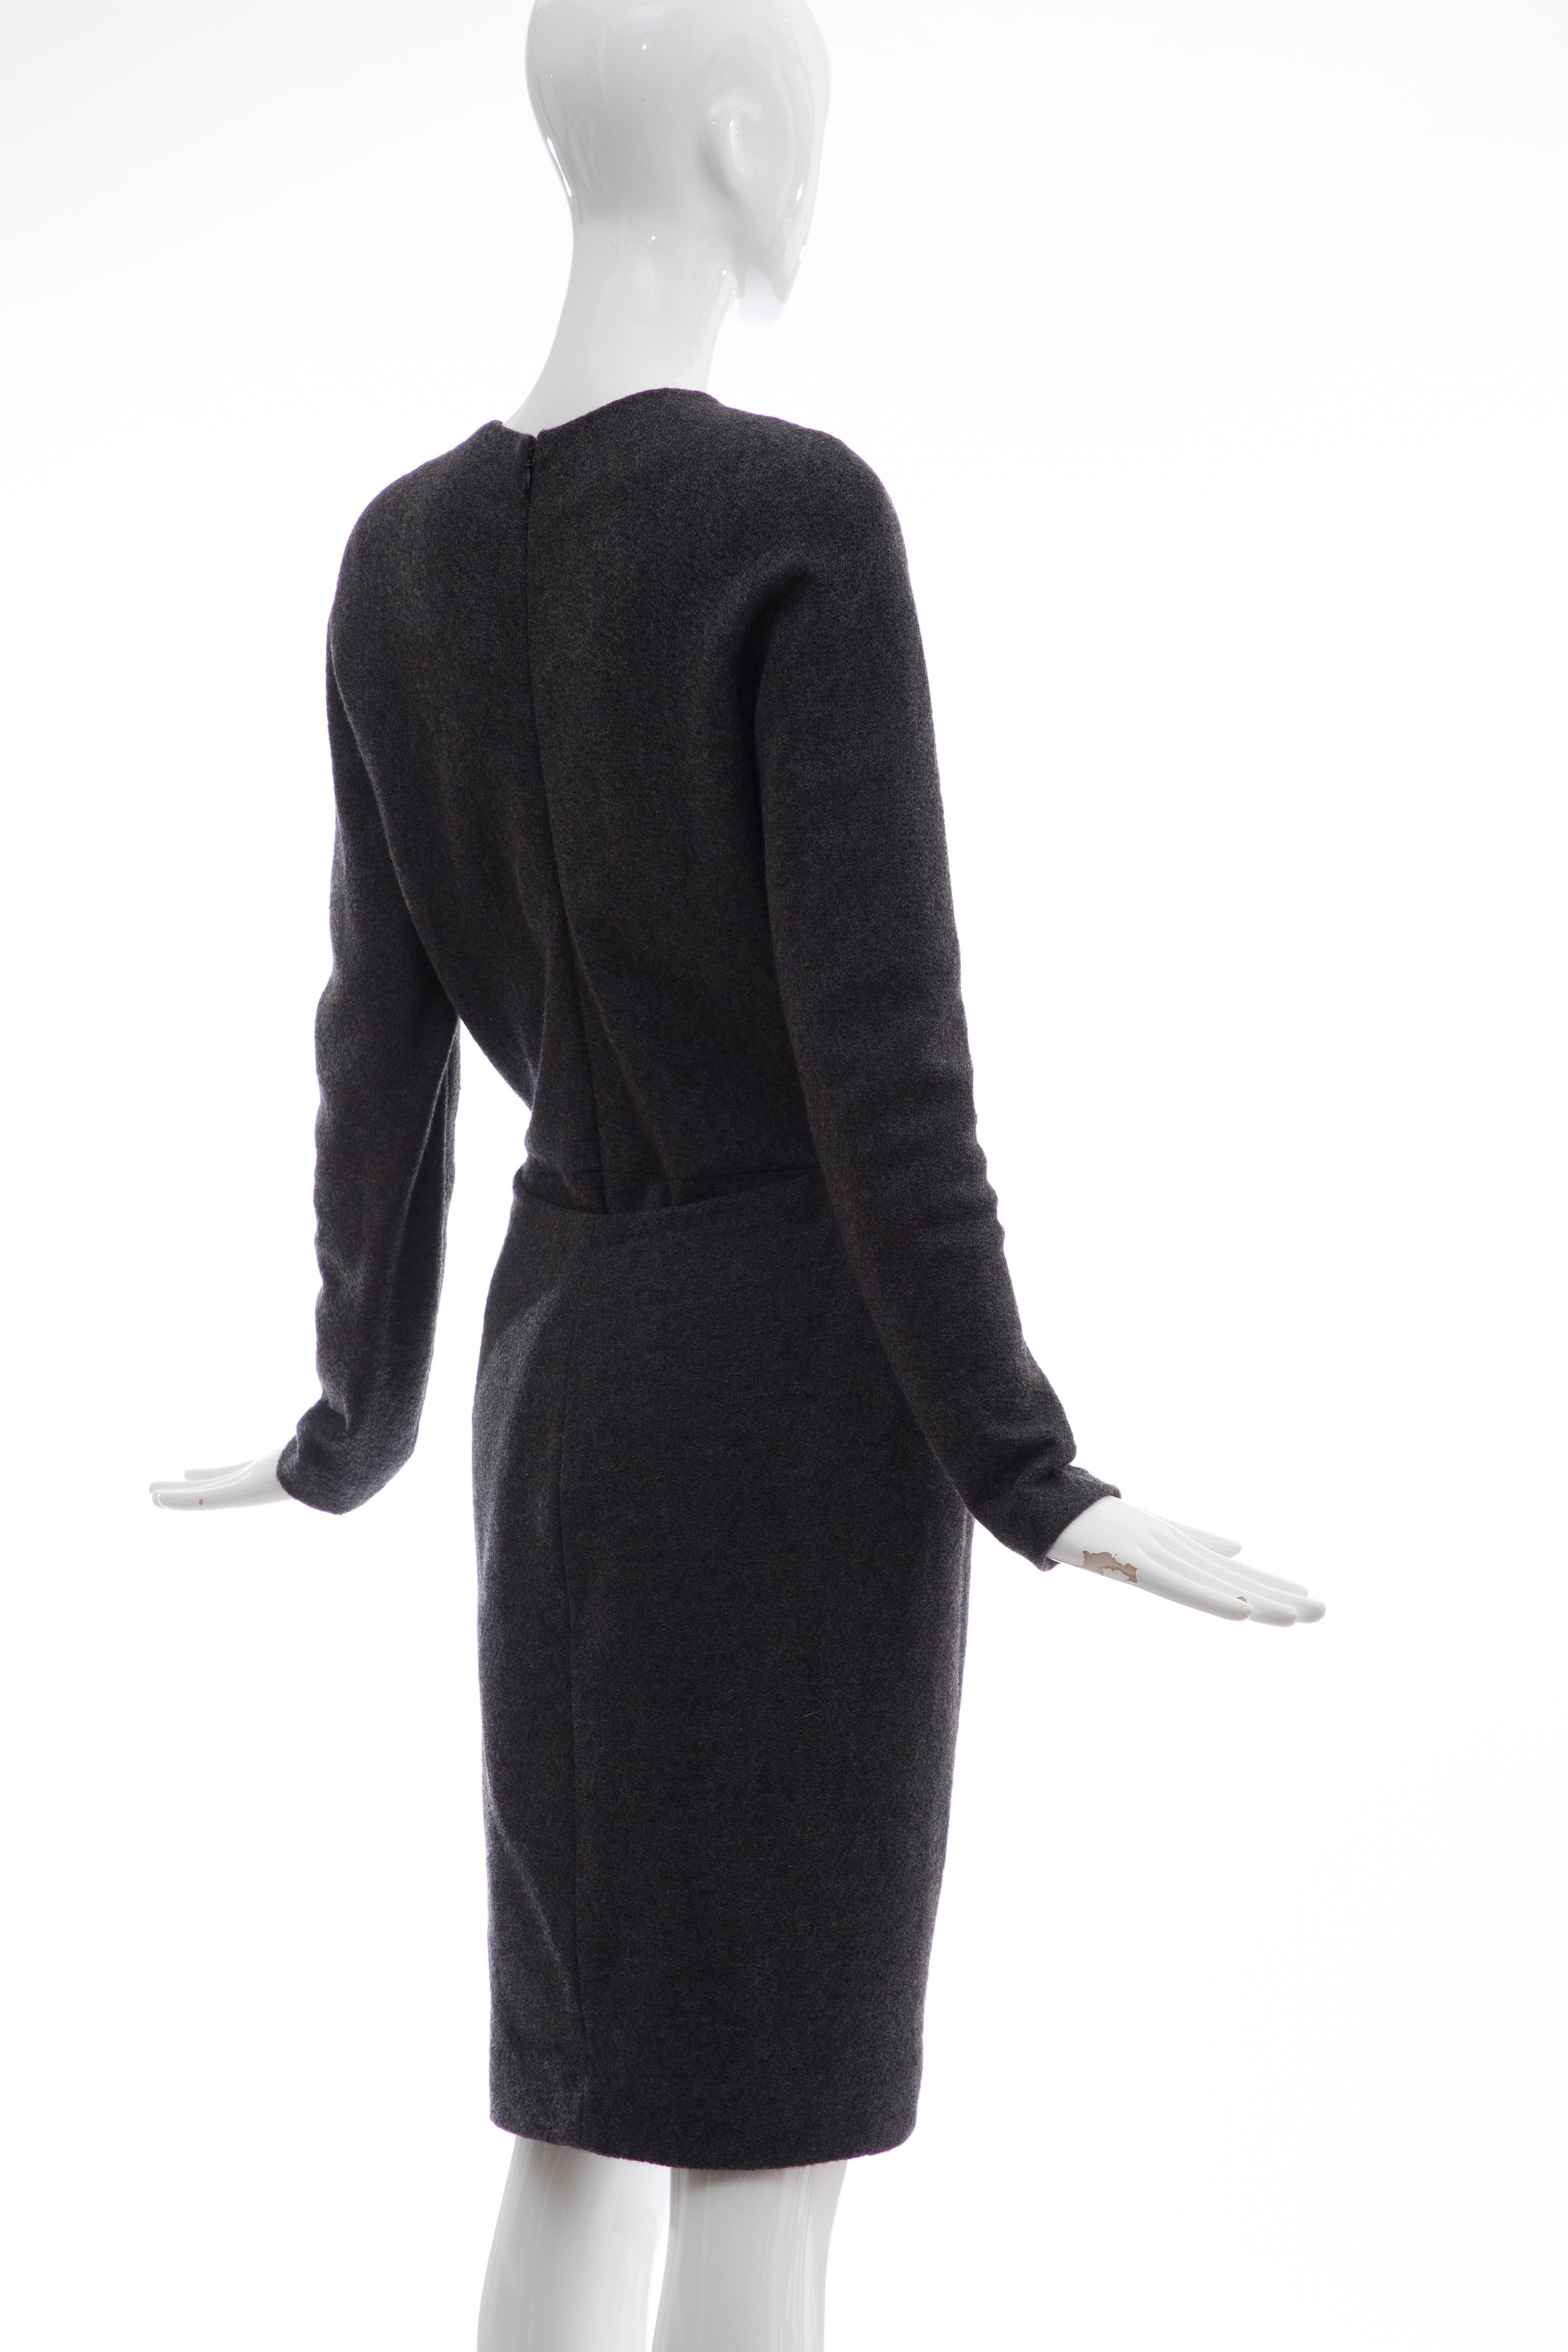 Black Donna Karan Charcoal Grey Alpaca Wool Crepe Jersey Wrap Dress,  Circa 1980's For Sale